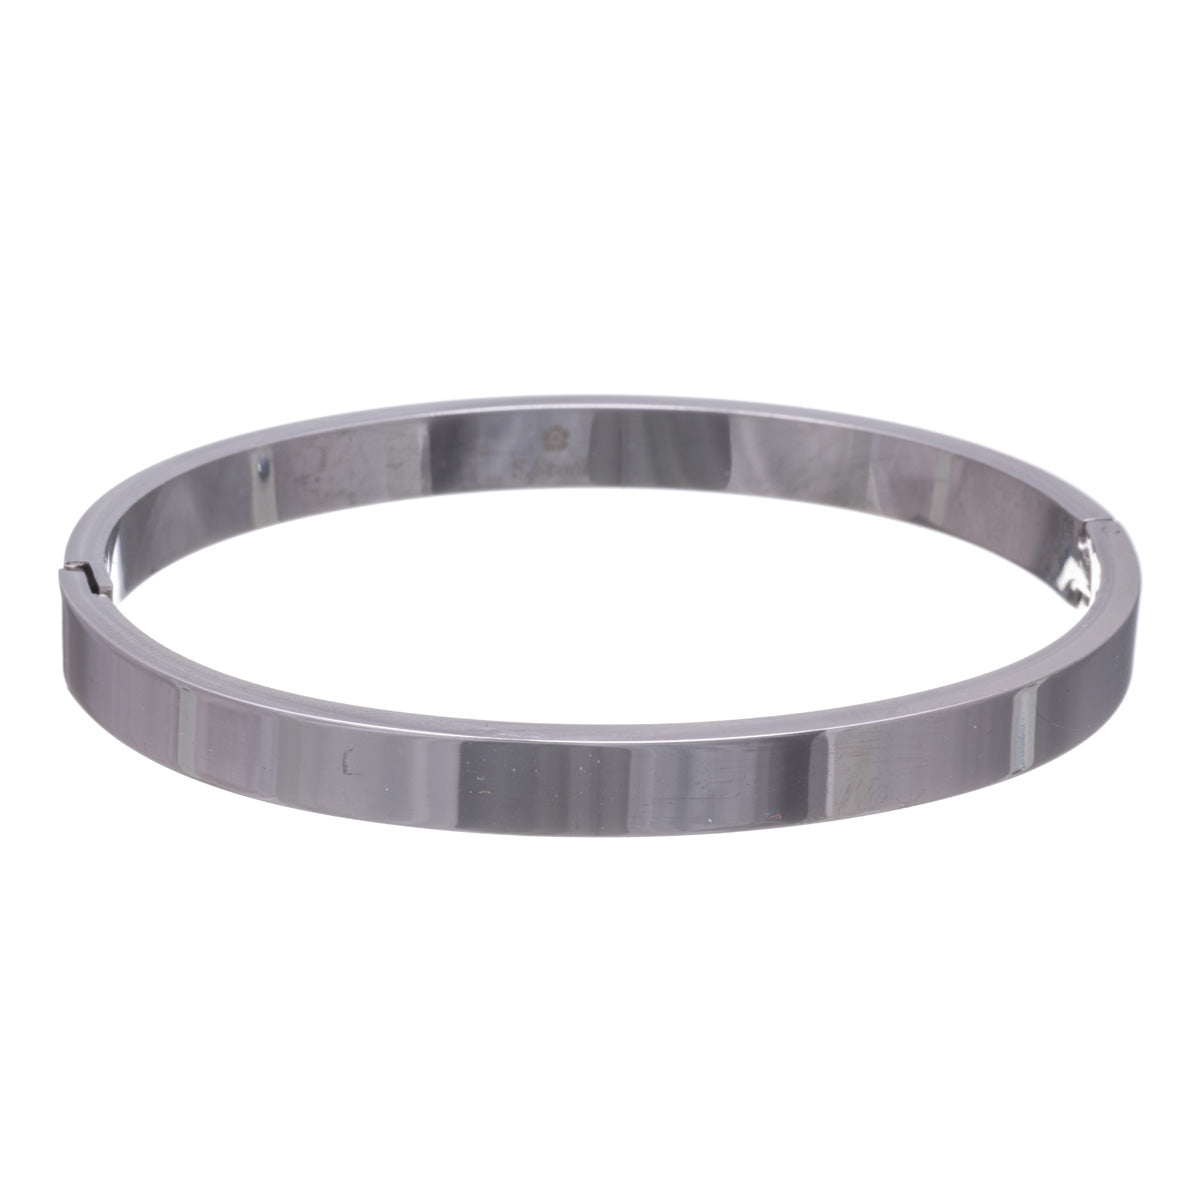 Flat steel bracelet with hinge